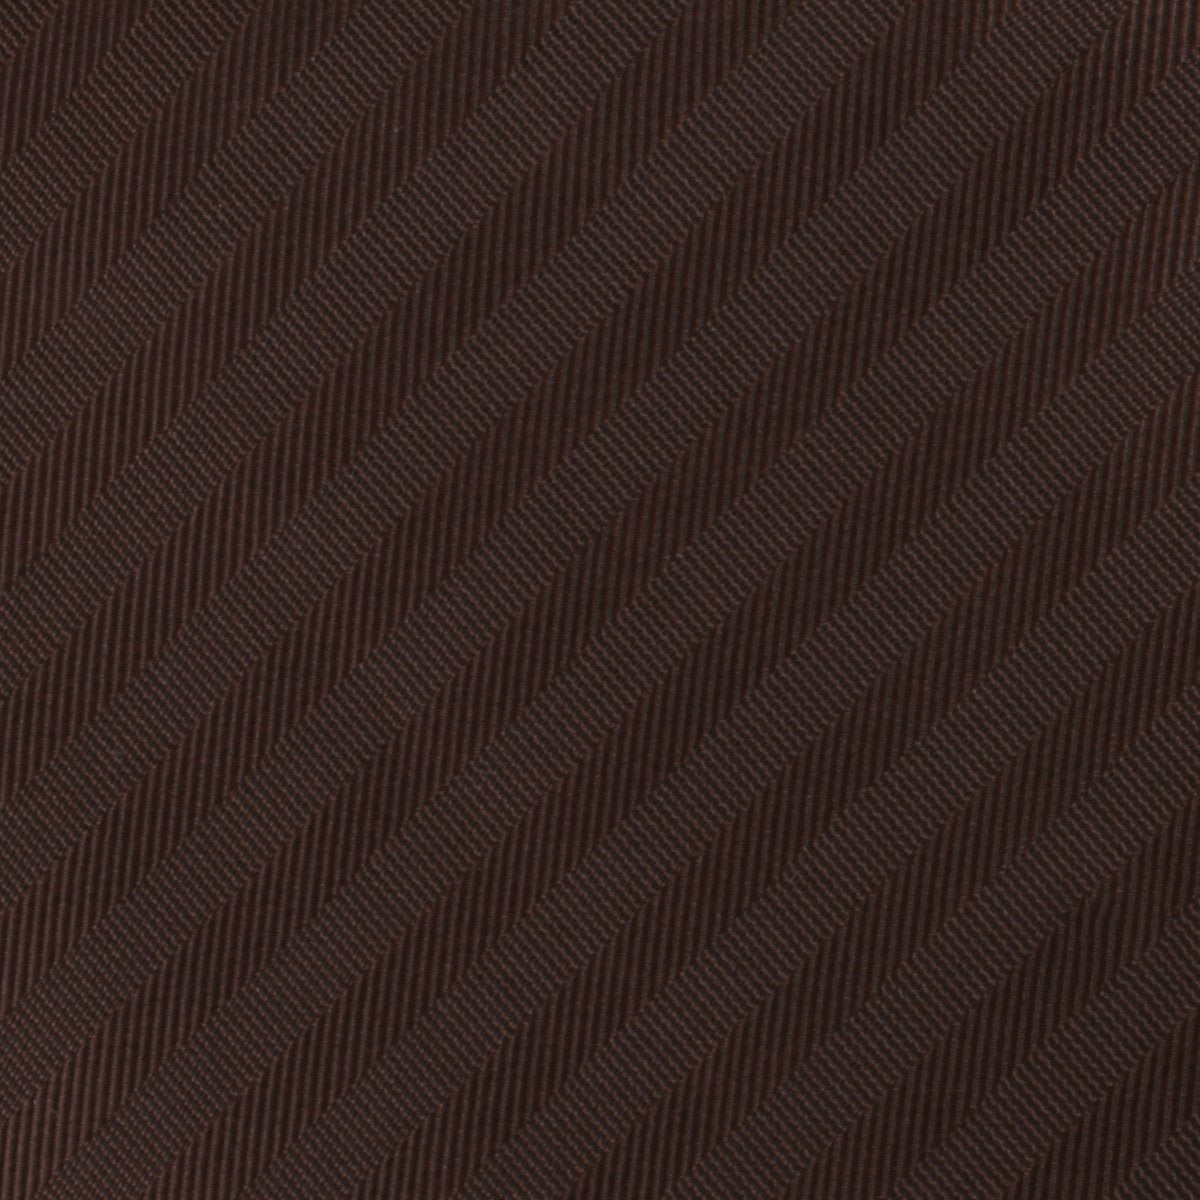 Cinnamon Brown Striped Skinny Tie Fabric